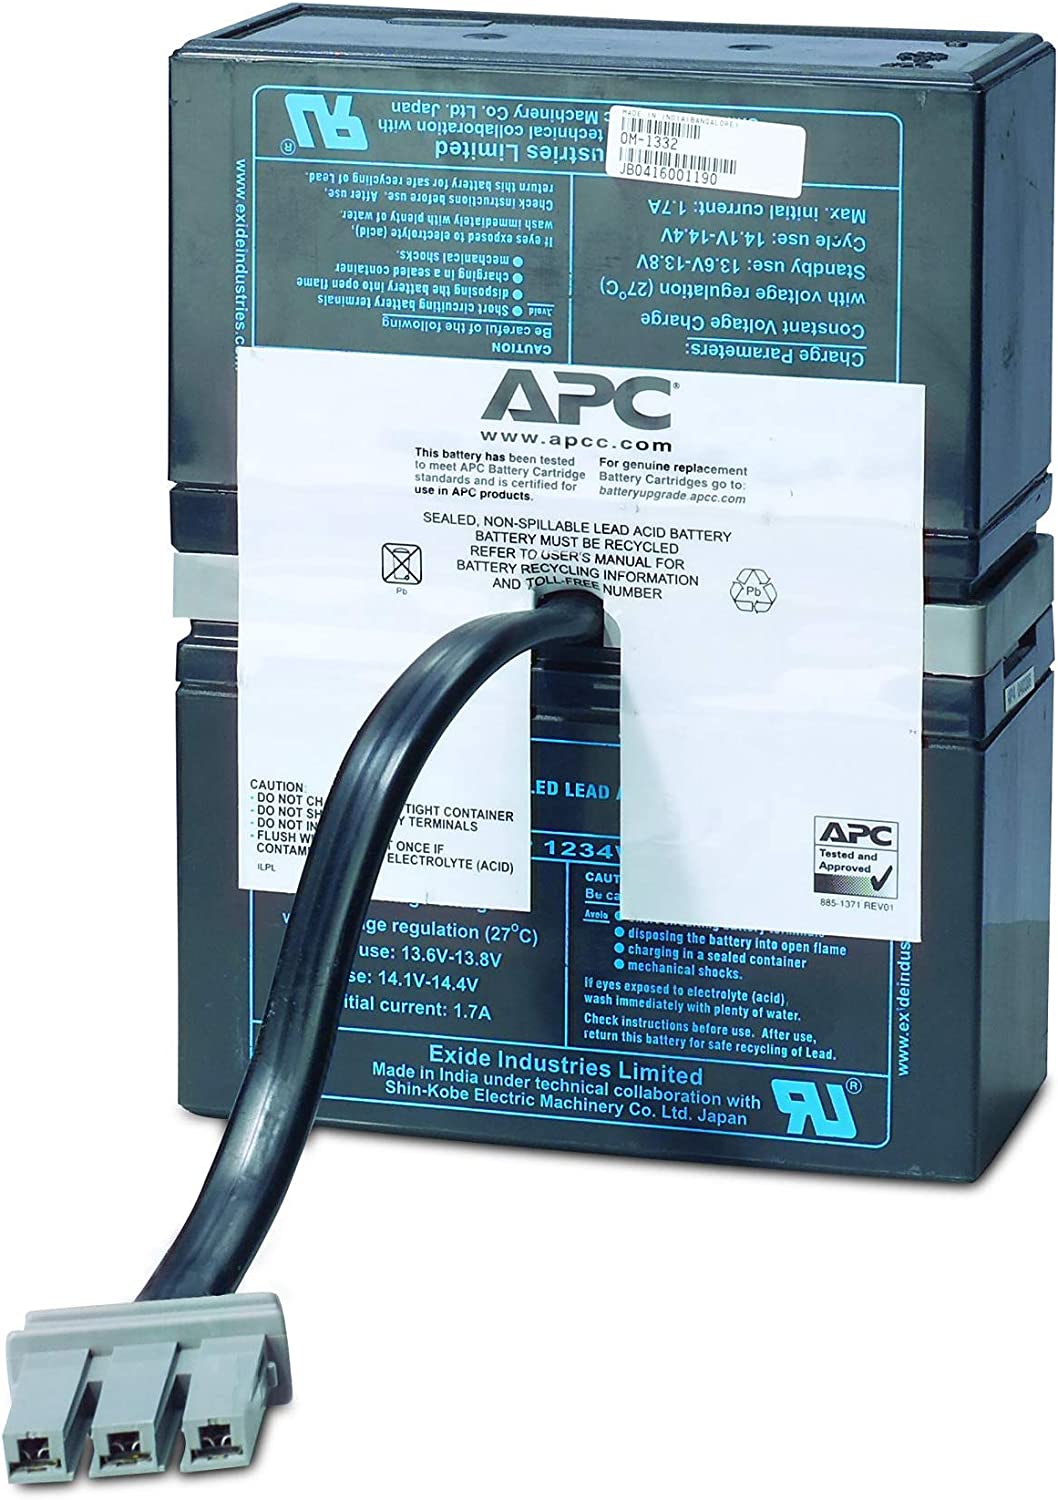 APC UPS Battery Replacement, RBC33, for APC Back-UPS Models BT1500, BT1500BP, BR1500, BX1500, SC1000, SN1000